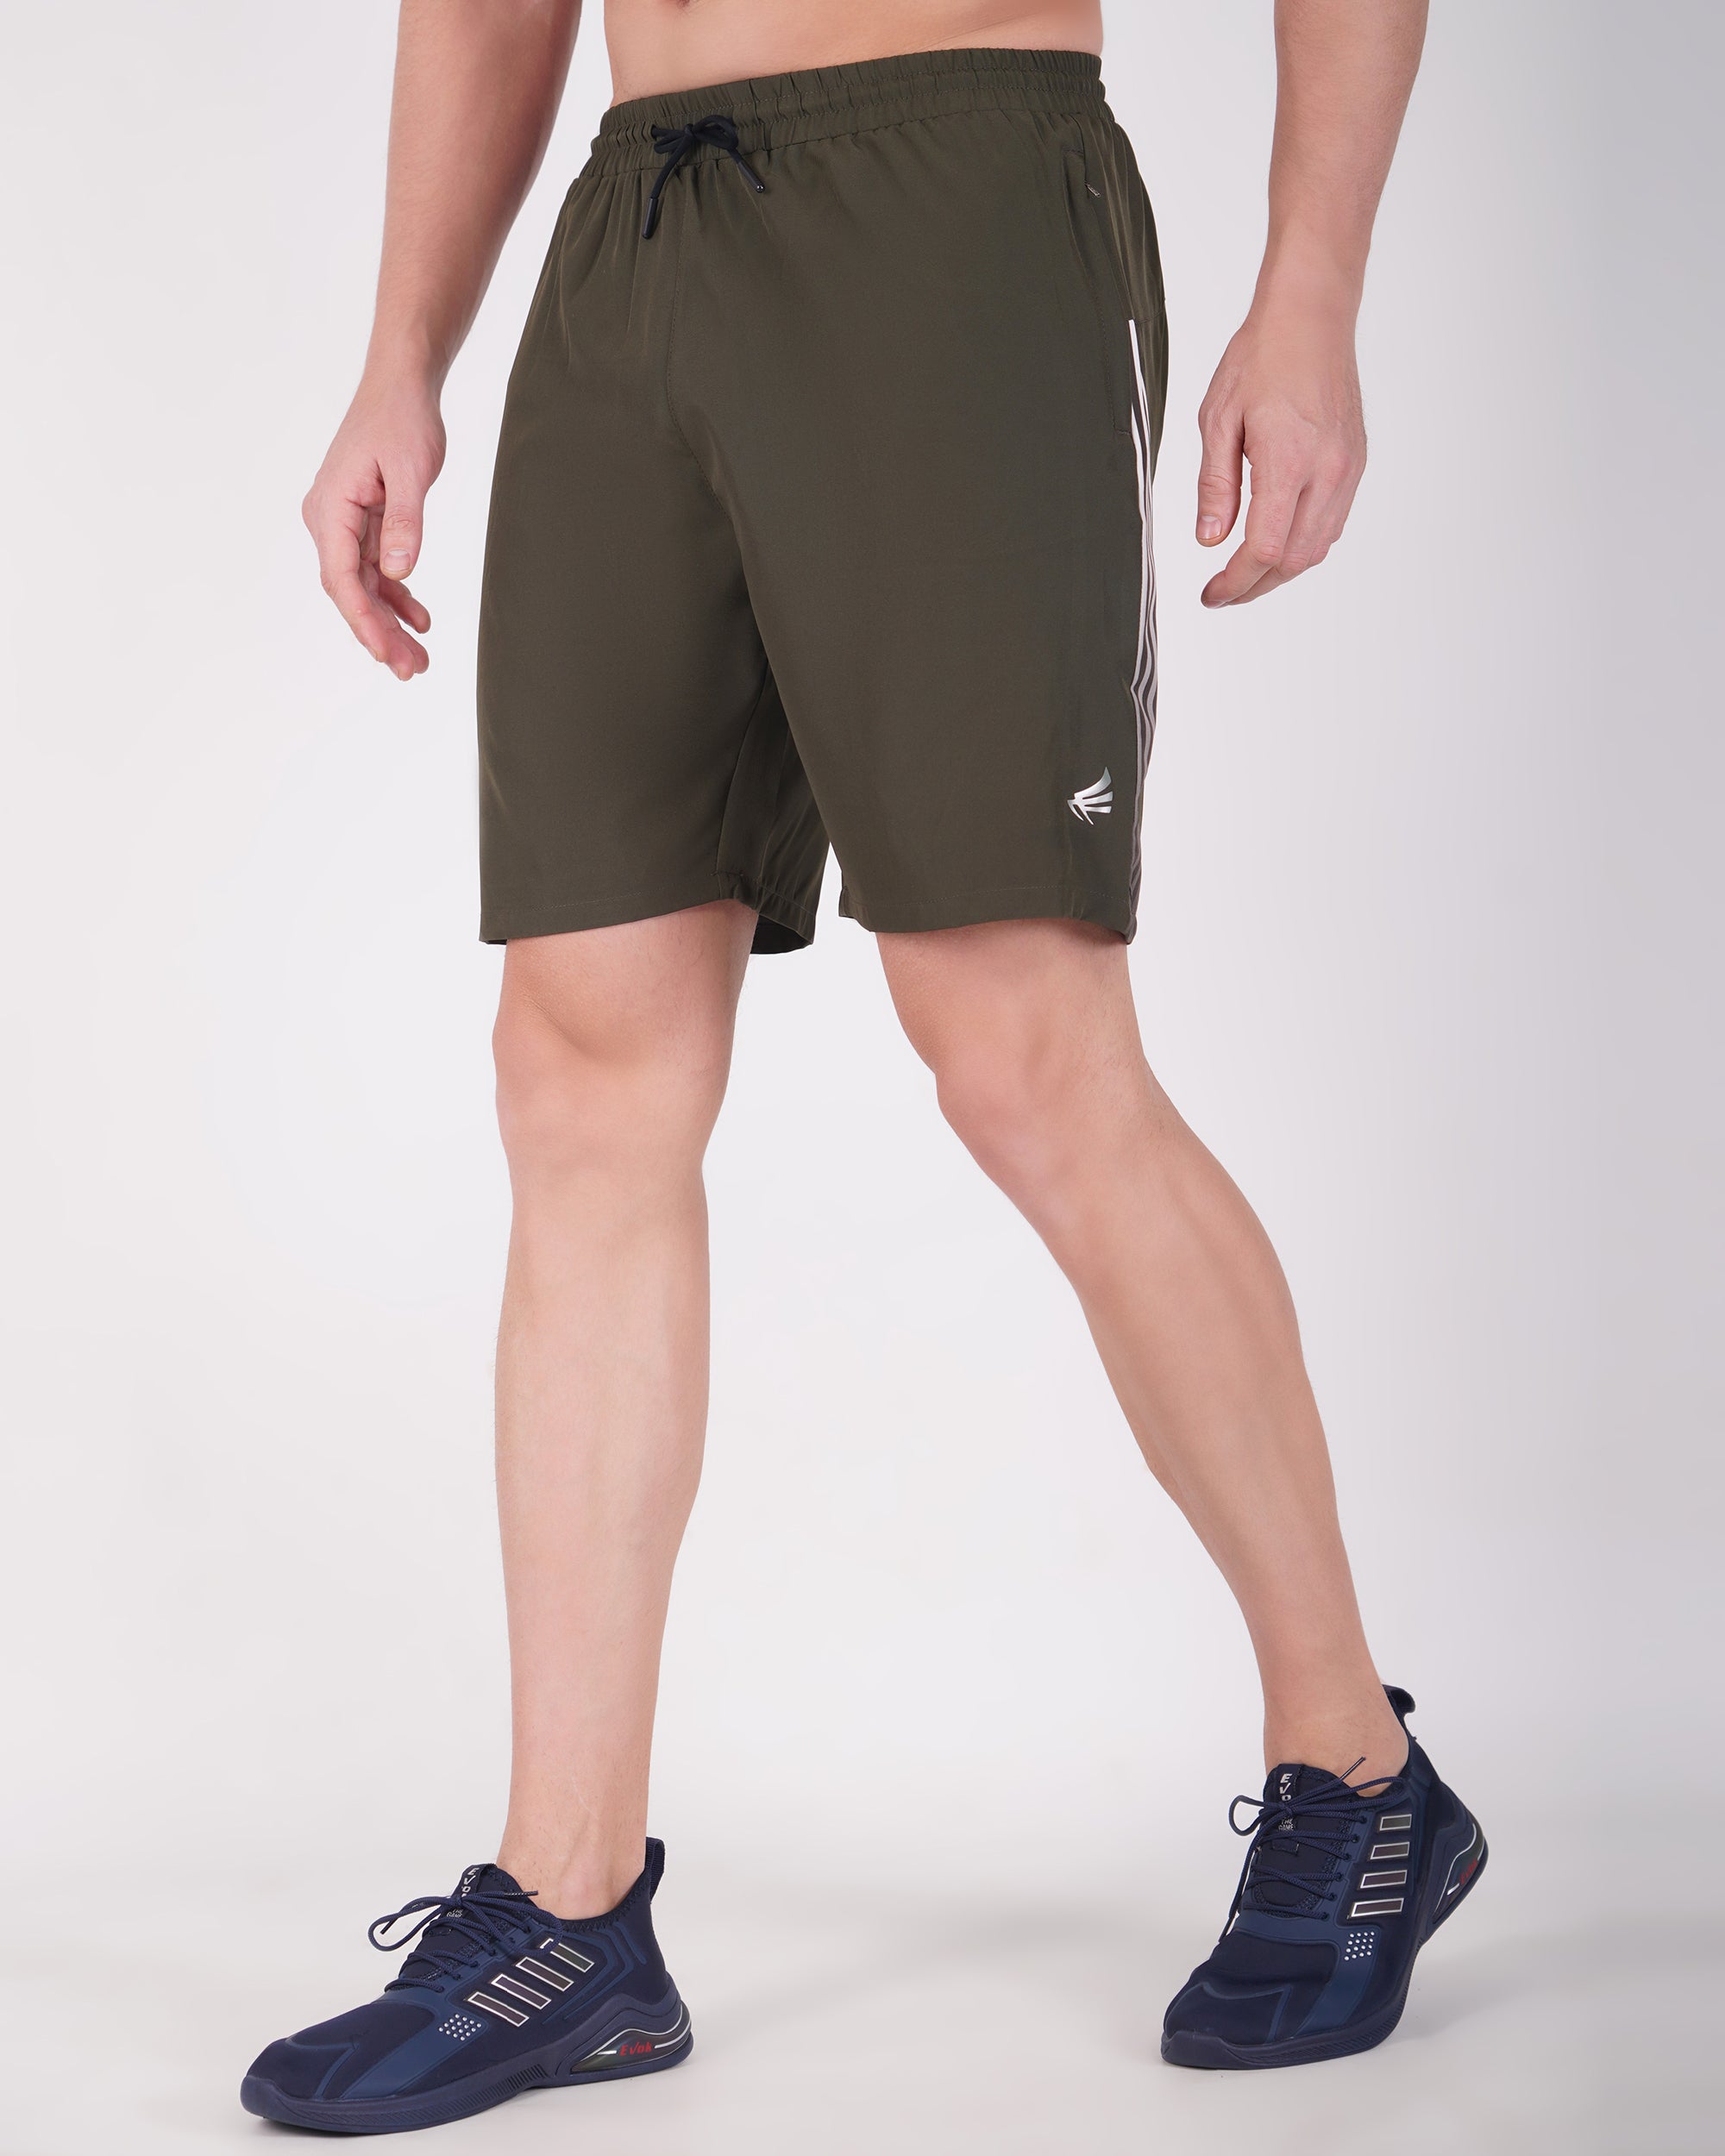 Deta-Dry Men's Active Lining Print Shorts Olive Green